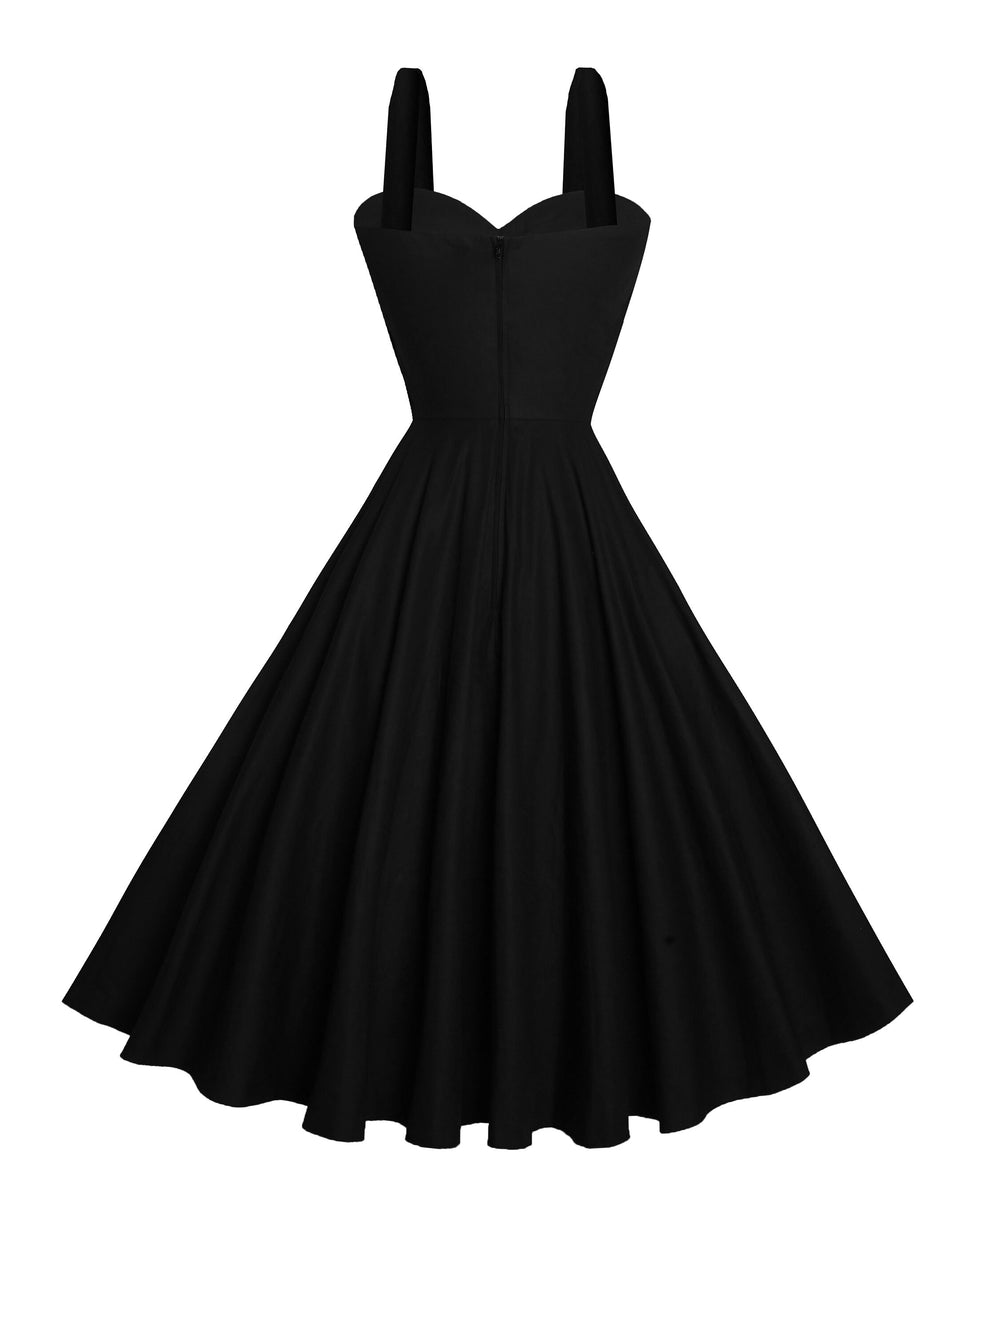 RTS - Size L - Catalina Dress in Raven Black Cotton